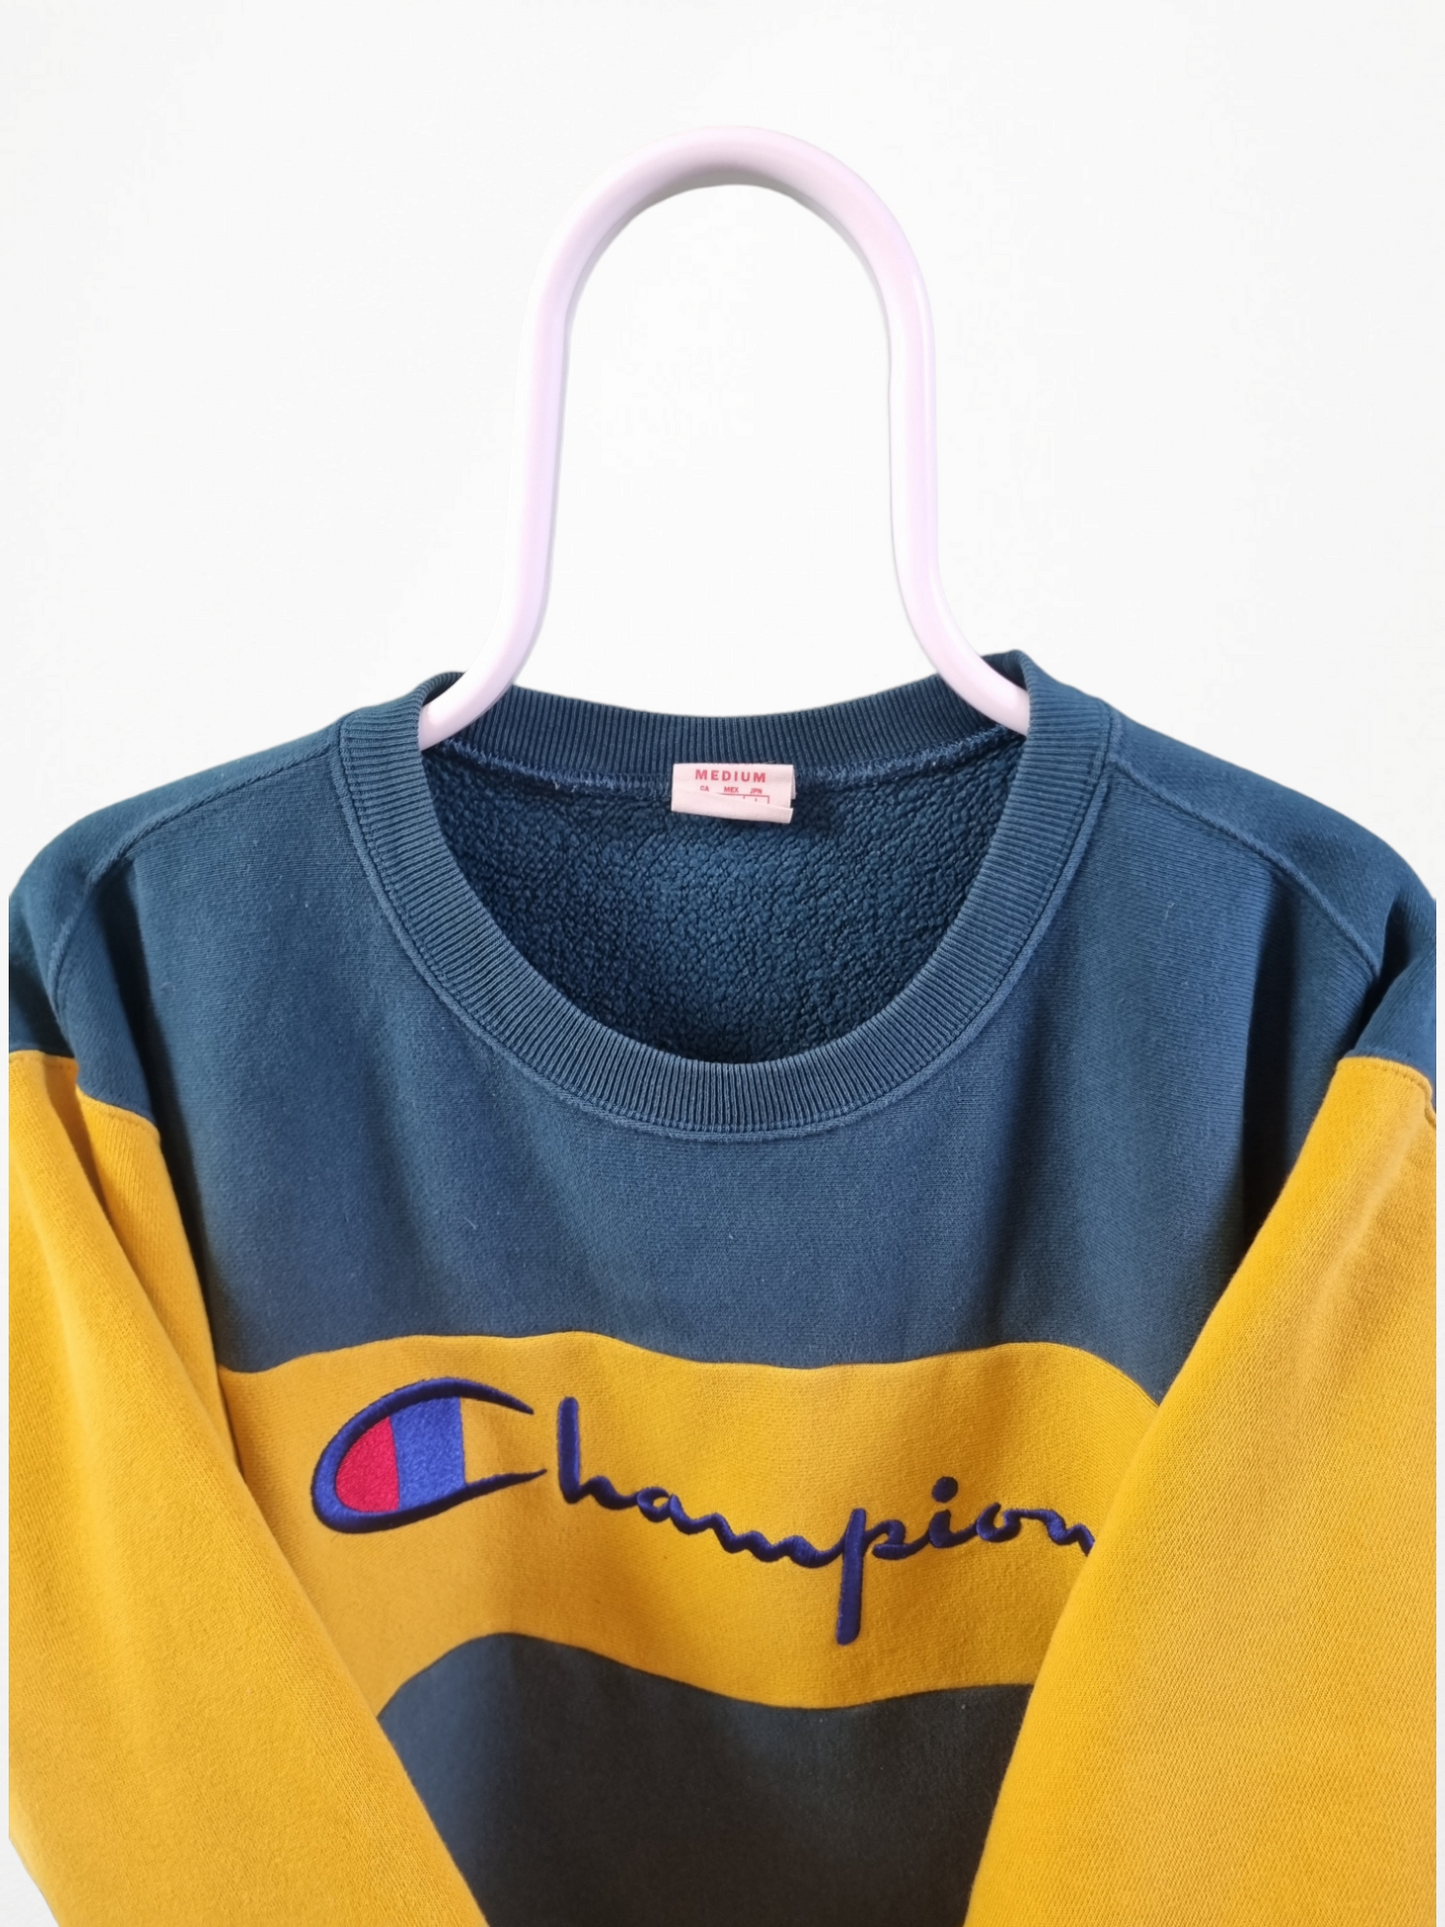 Champion sweater maat M